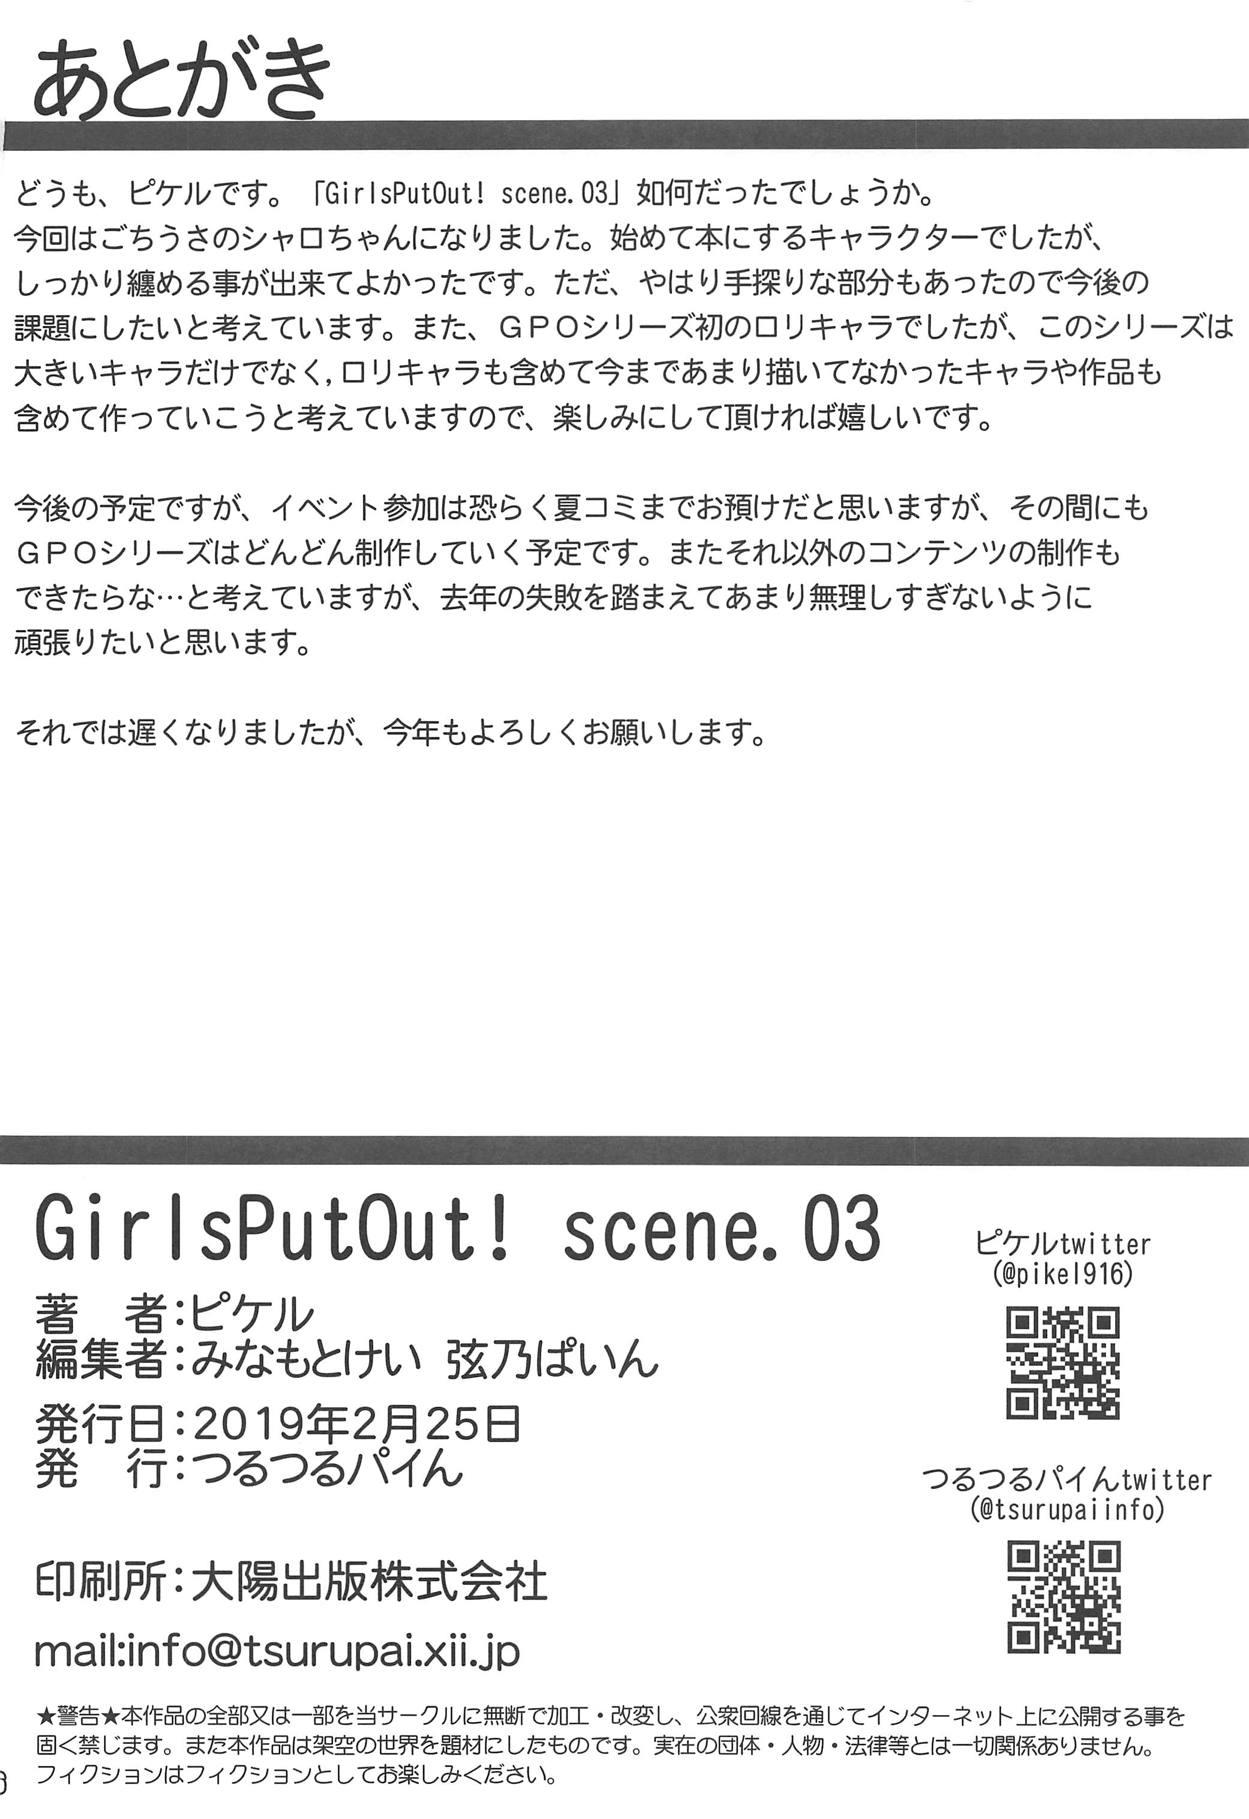 GirlsPutOut! scene.03 14